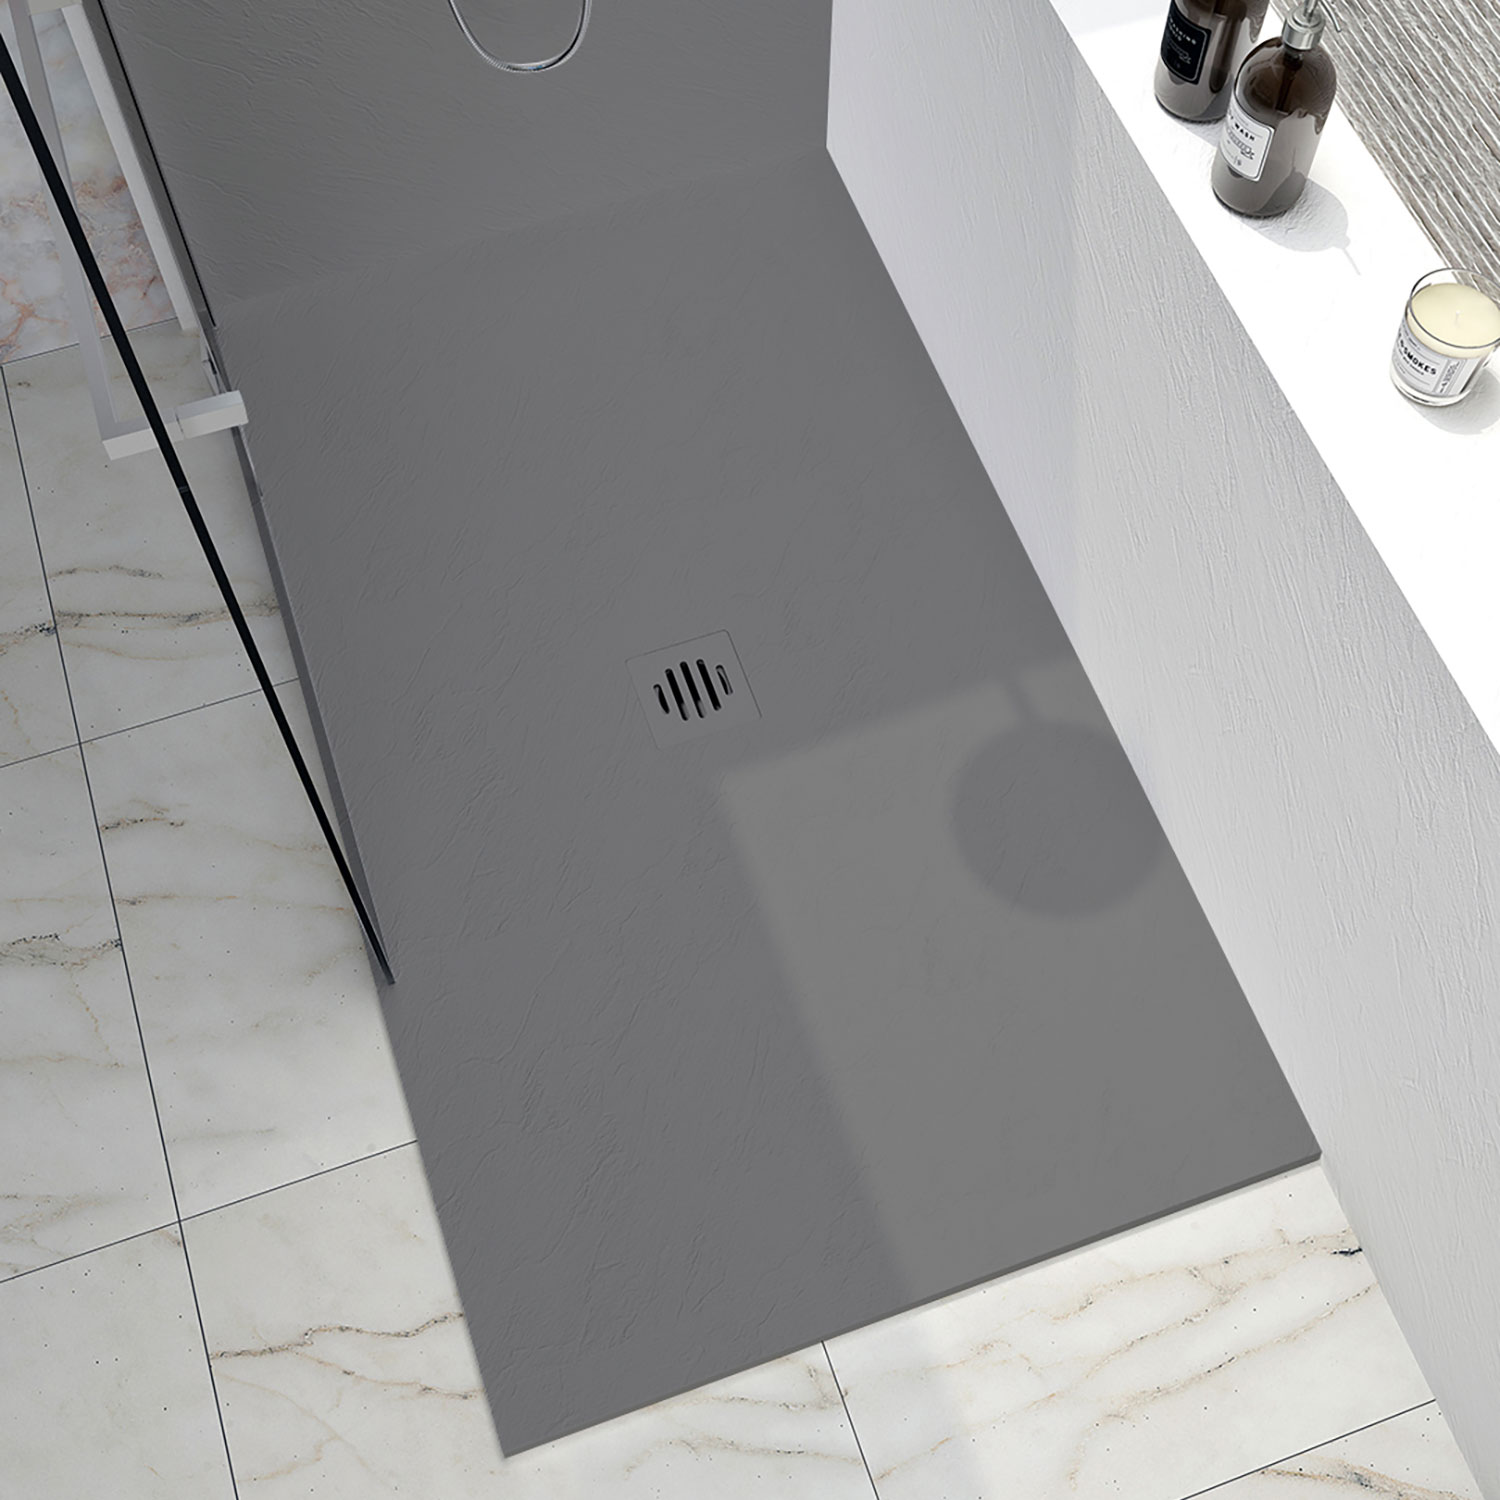 Shower base Slate 60 x 36, custom-made tile flange installation, in concrete grey